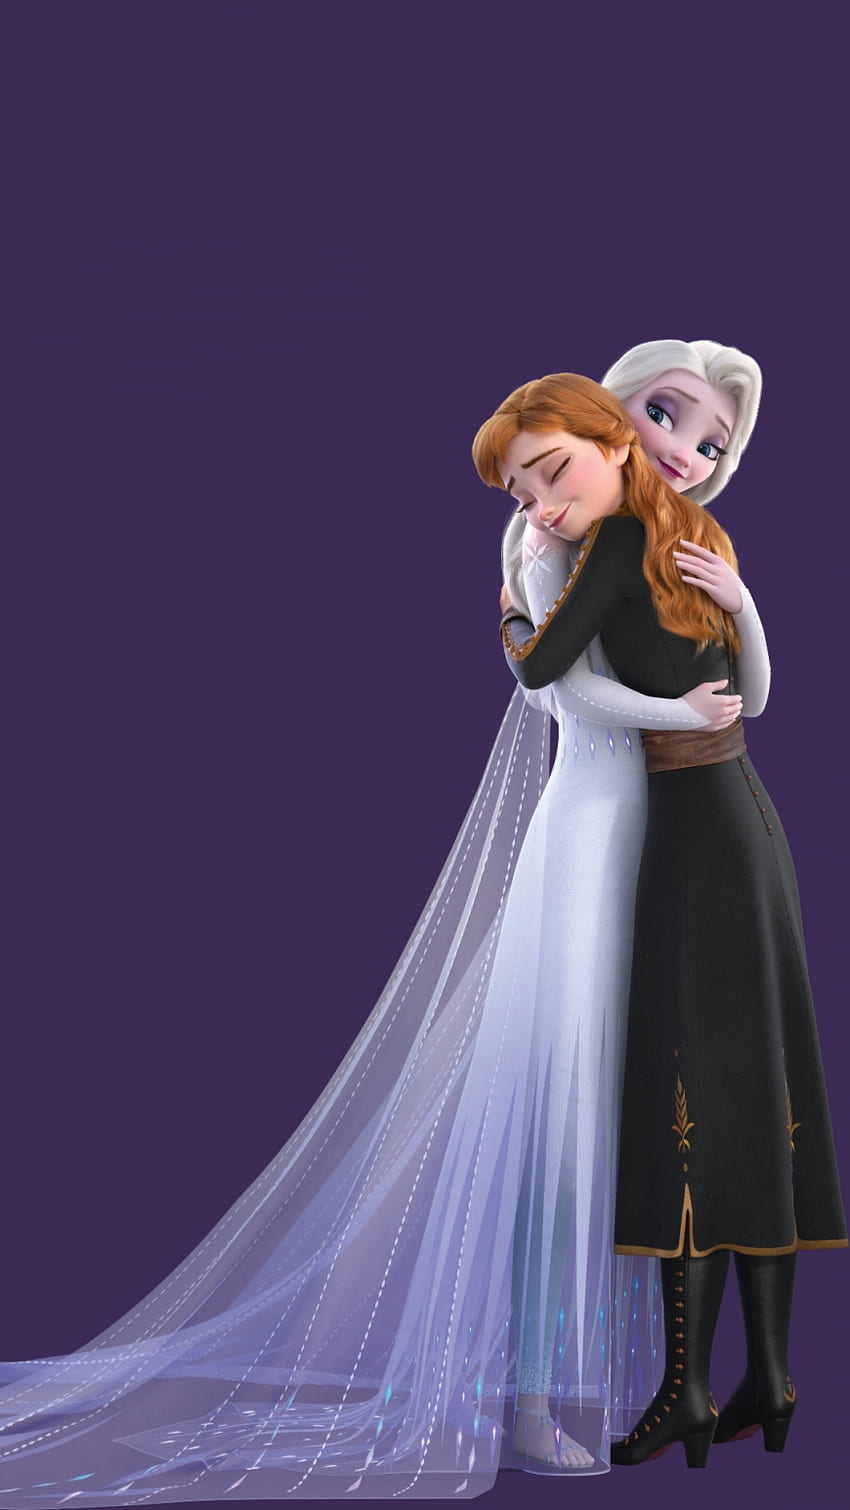 Frozen Photo Anna  Wallpaper iphone disney princess Disney princess  frozen Disney princess pictures